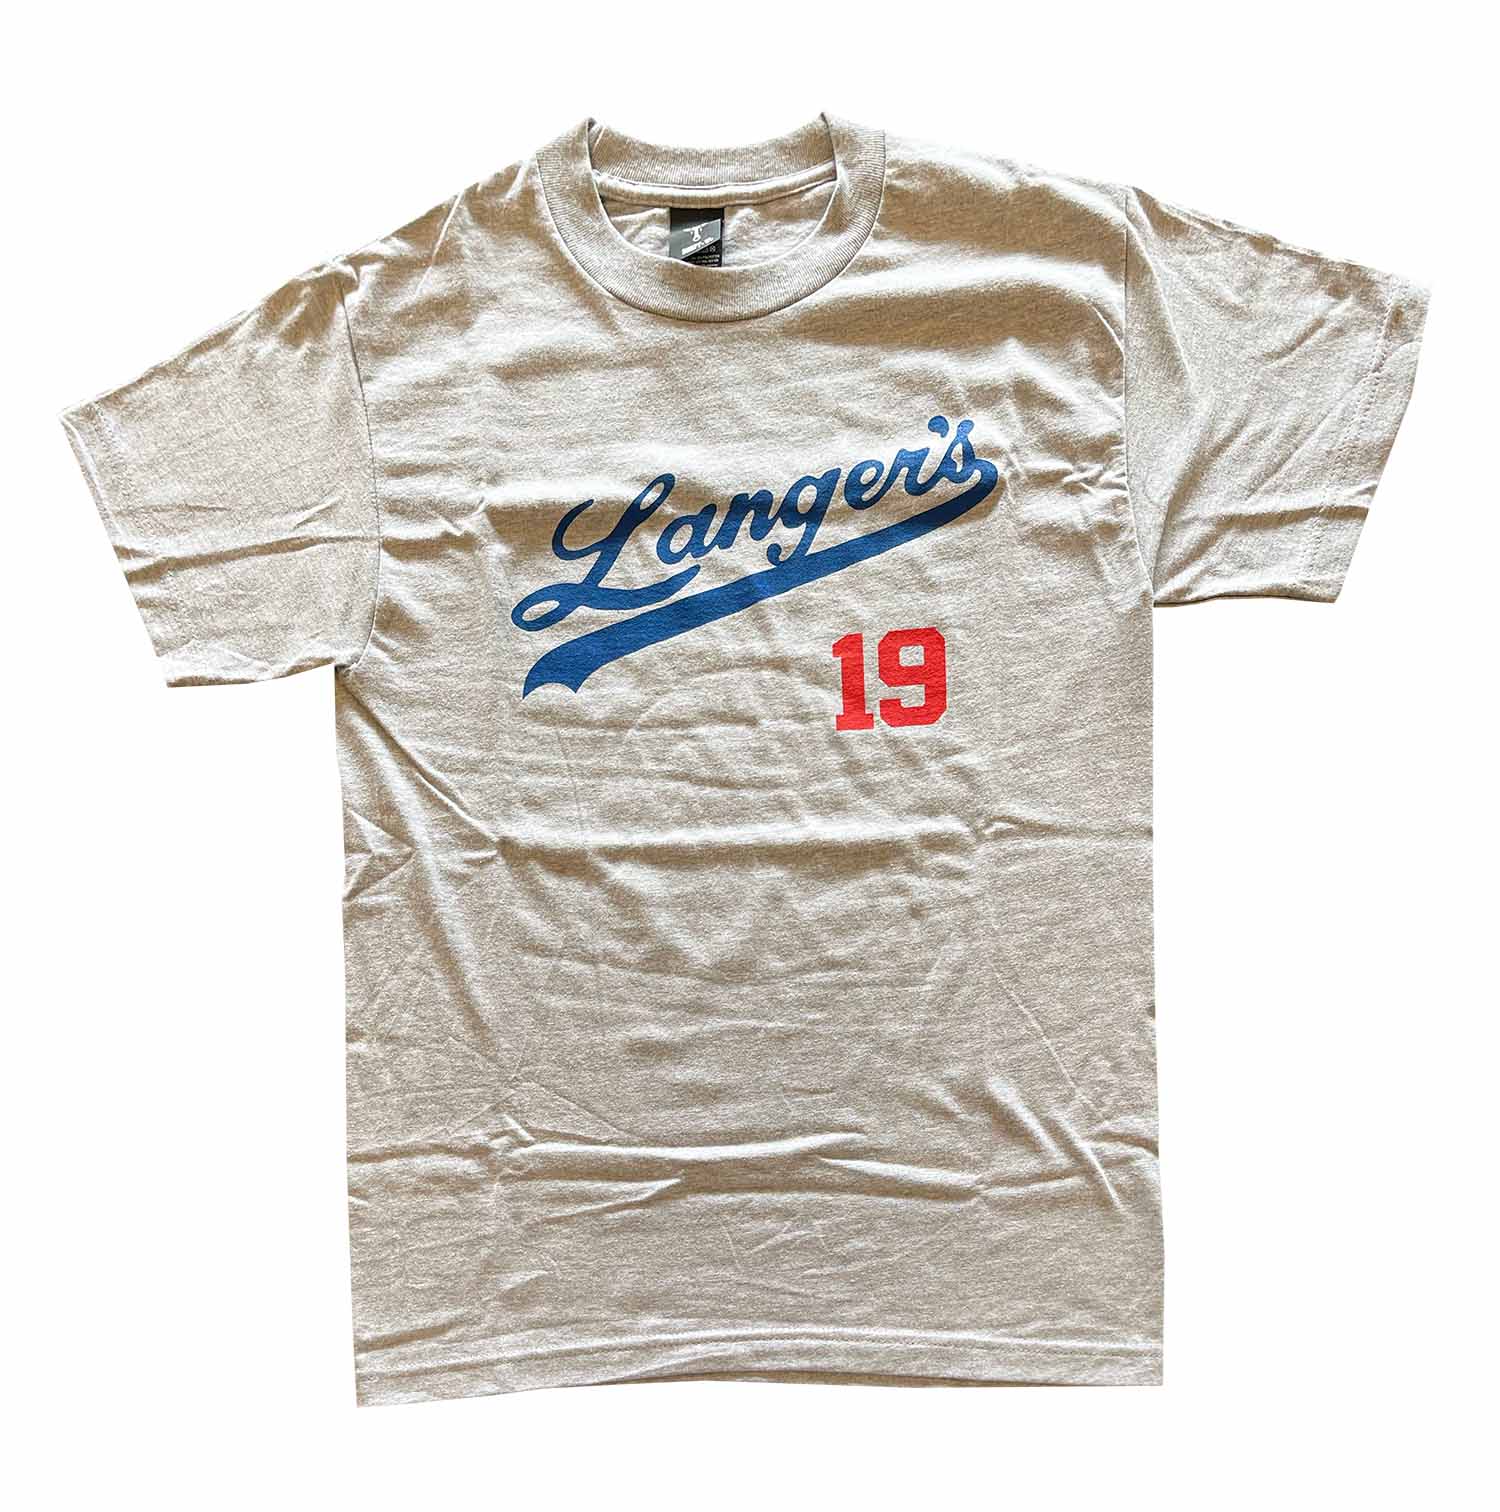 Langer's Dodgers-Style #19 Shirt